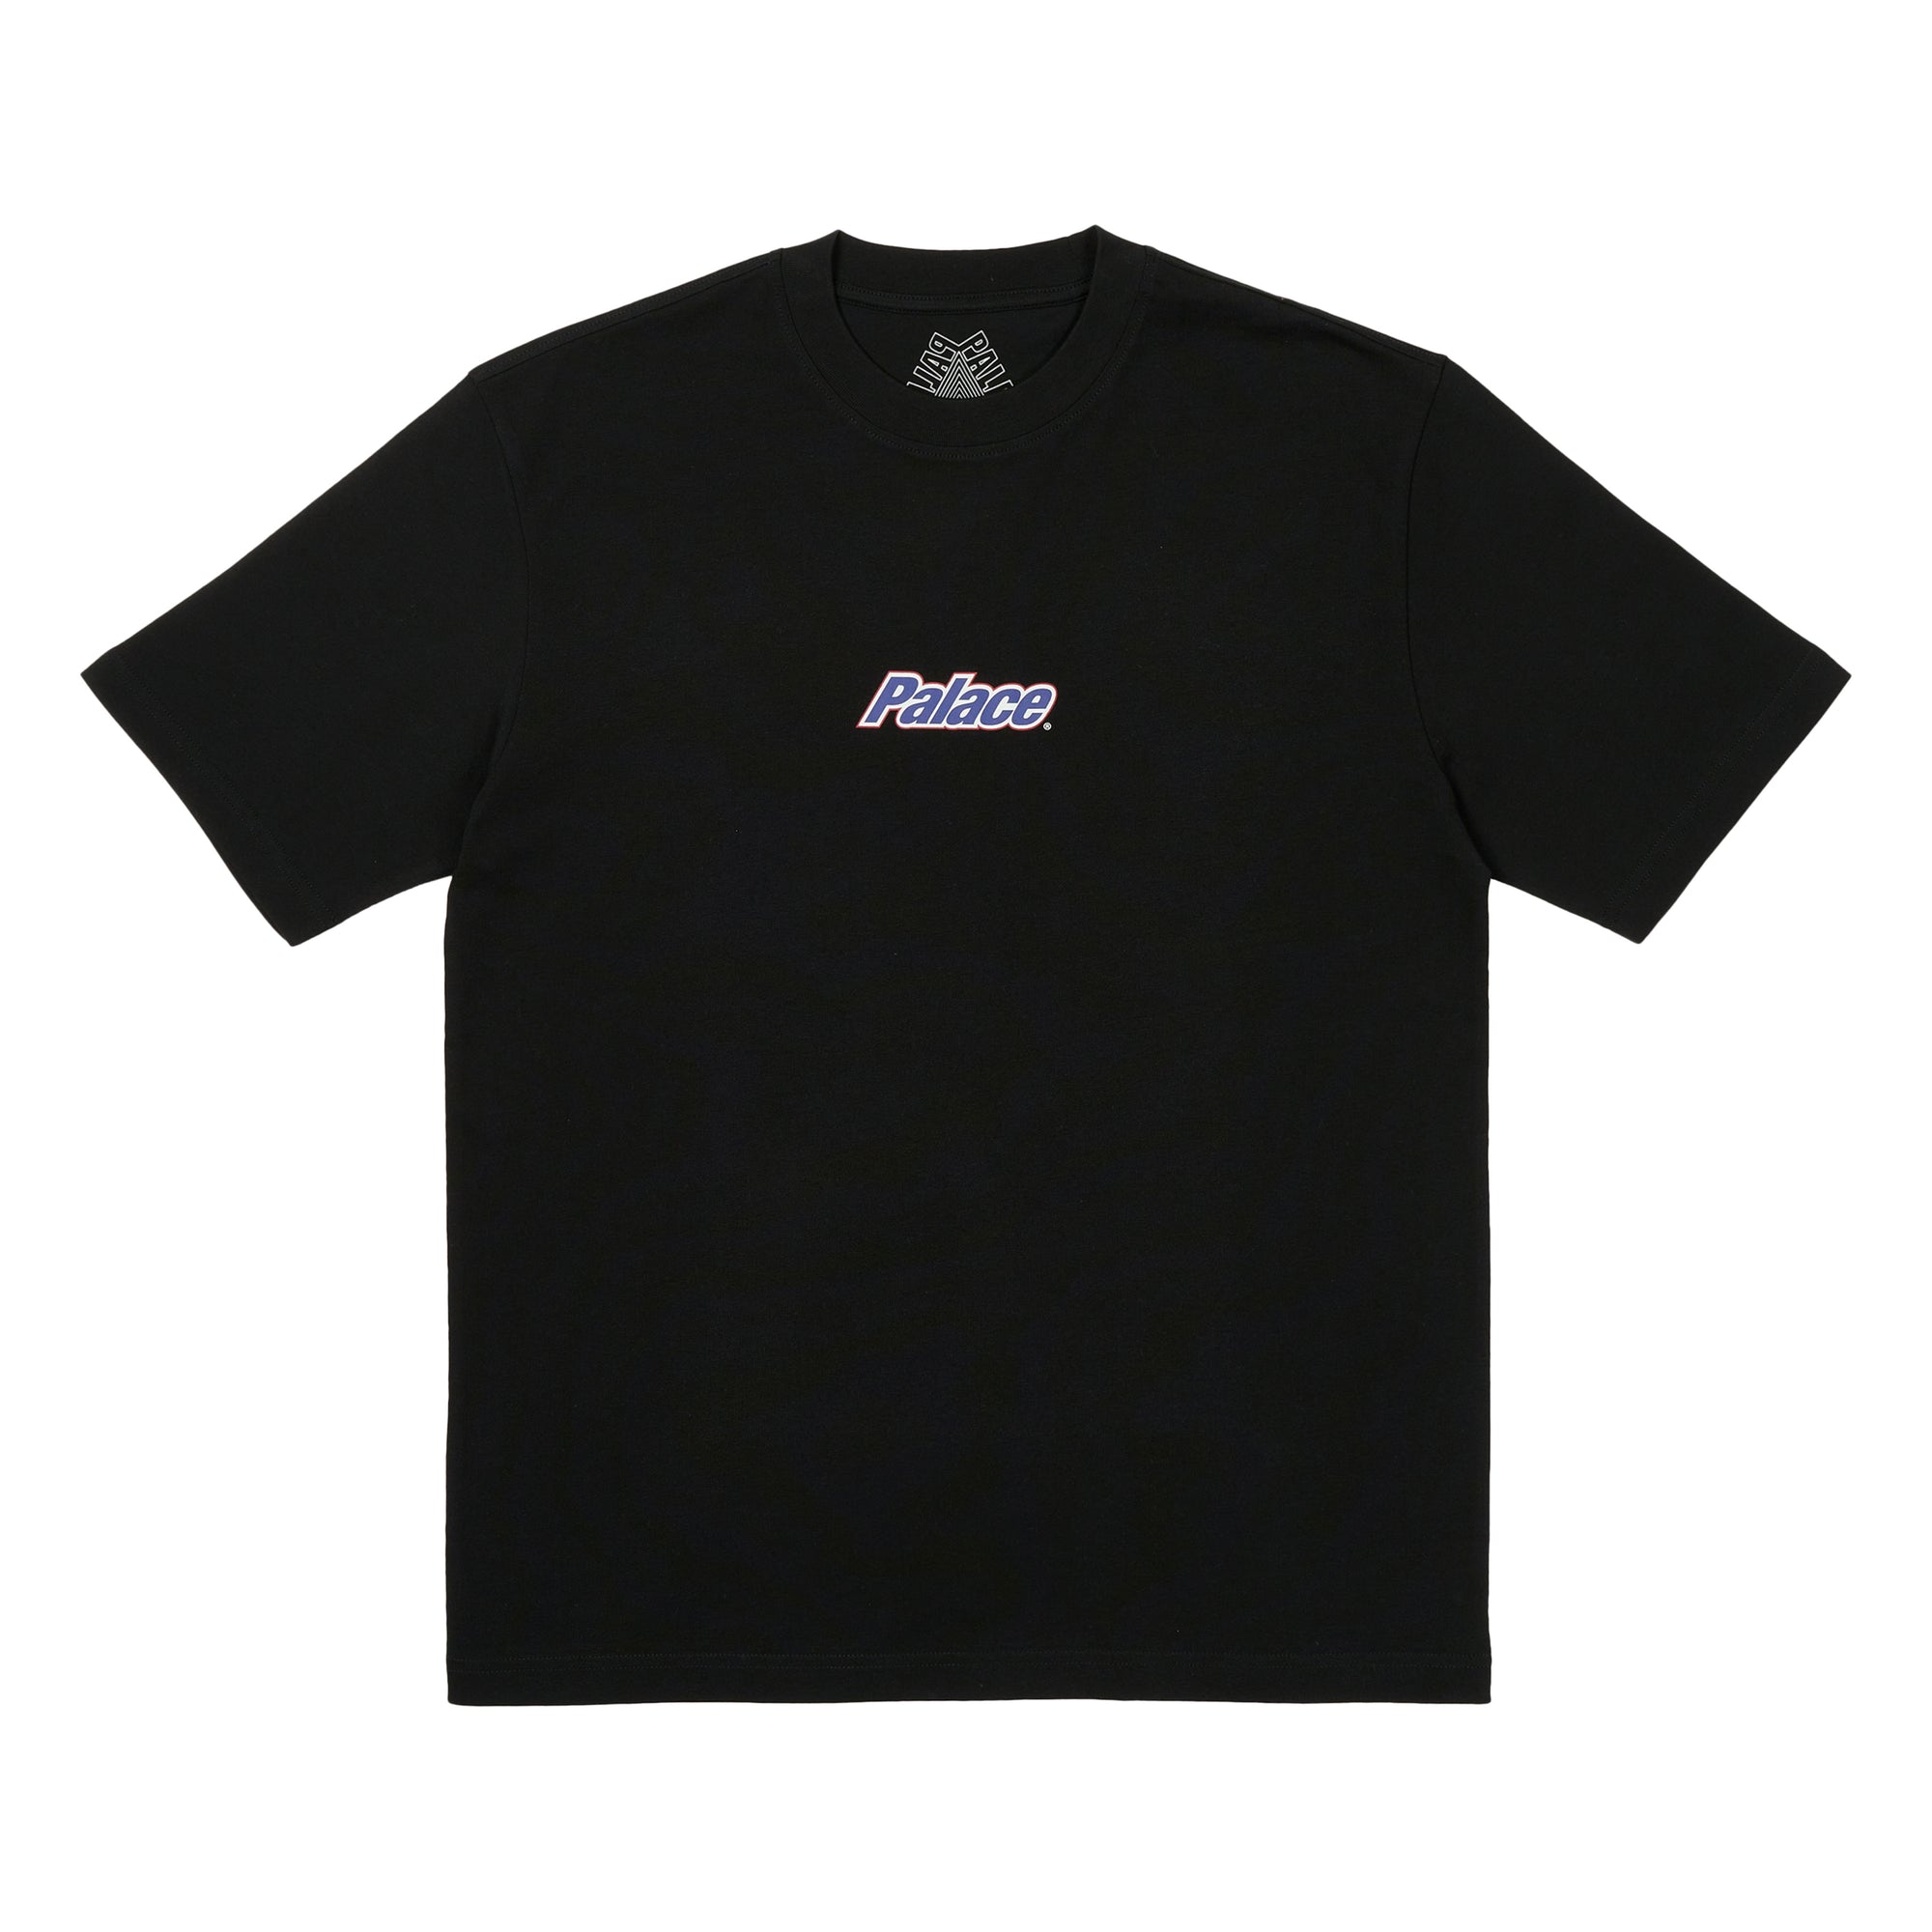 Palace - Men’s Standard T-Shirt - (Black) view 1